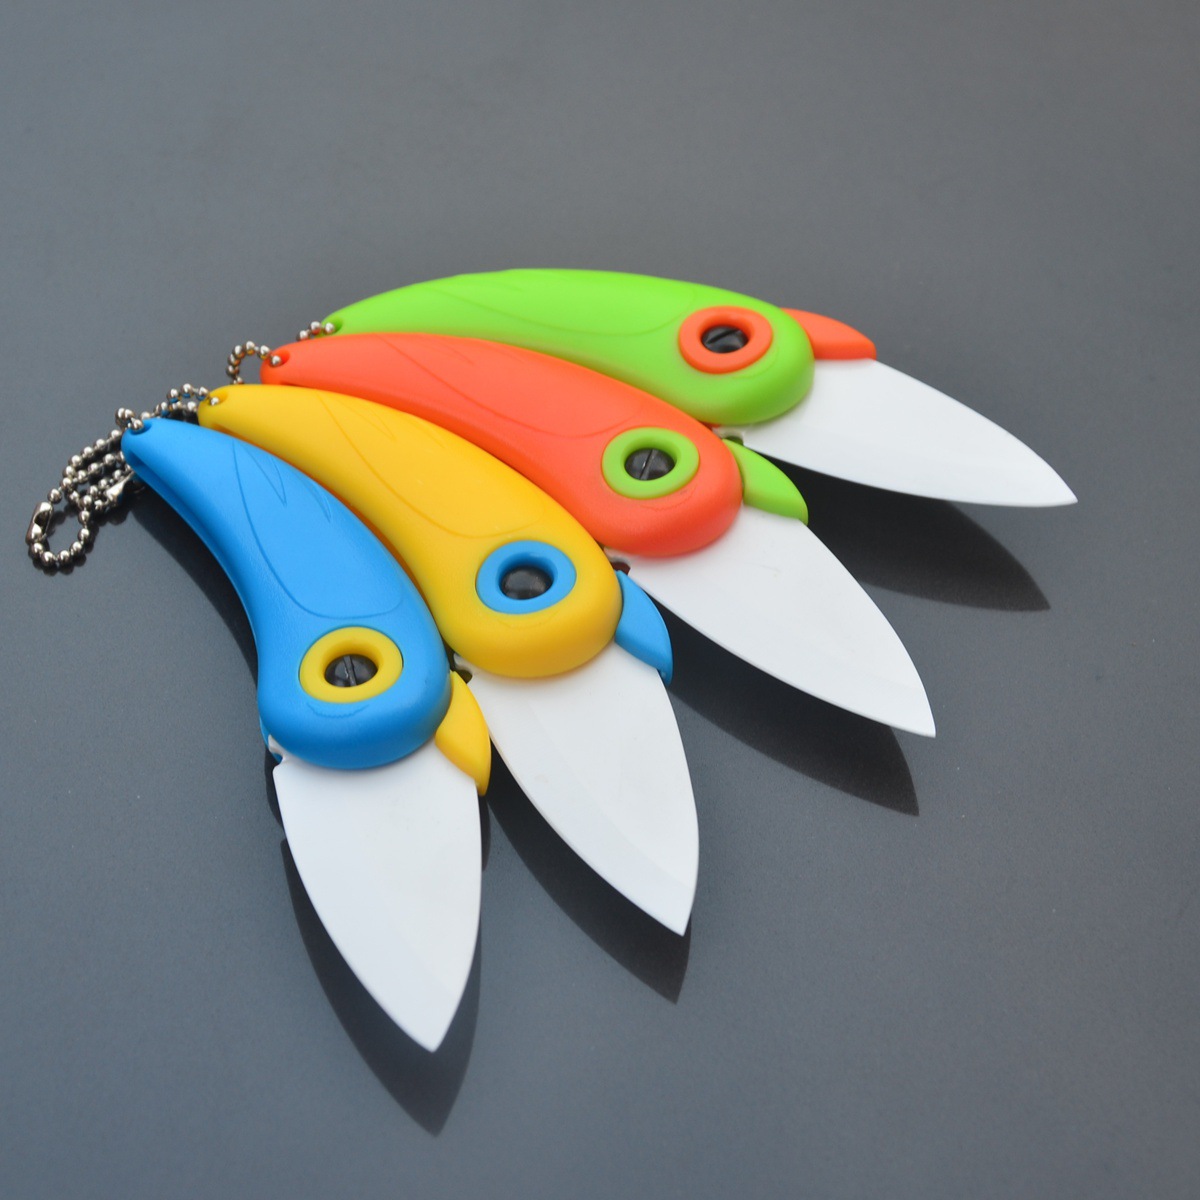 Ceramic knife bird knife parrot knife portable folding knife gift tool children complement food cutting knife bulk